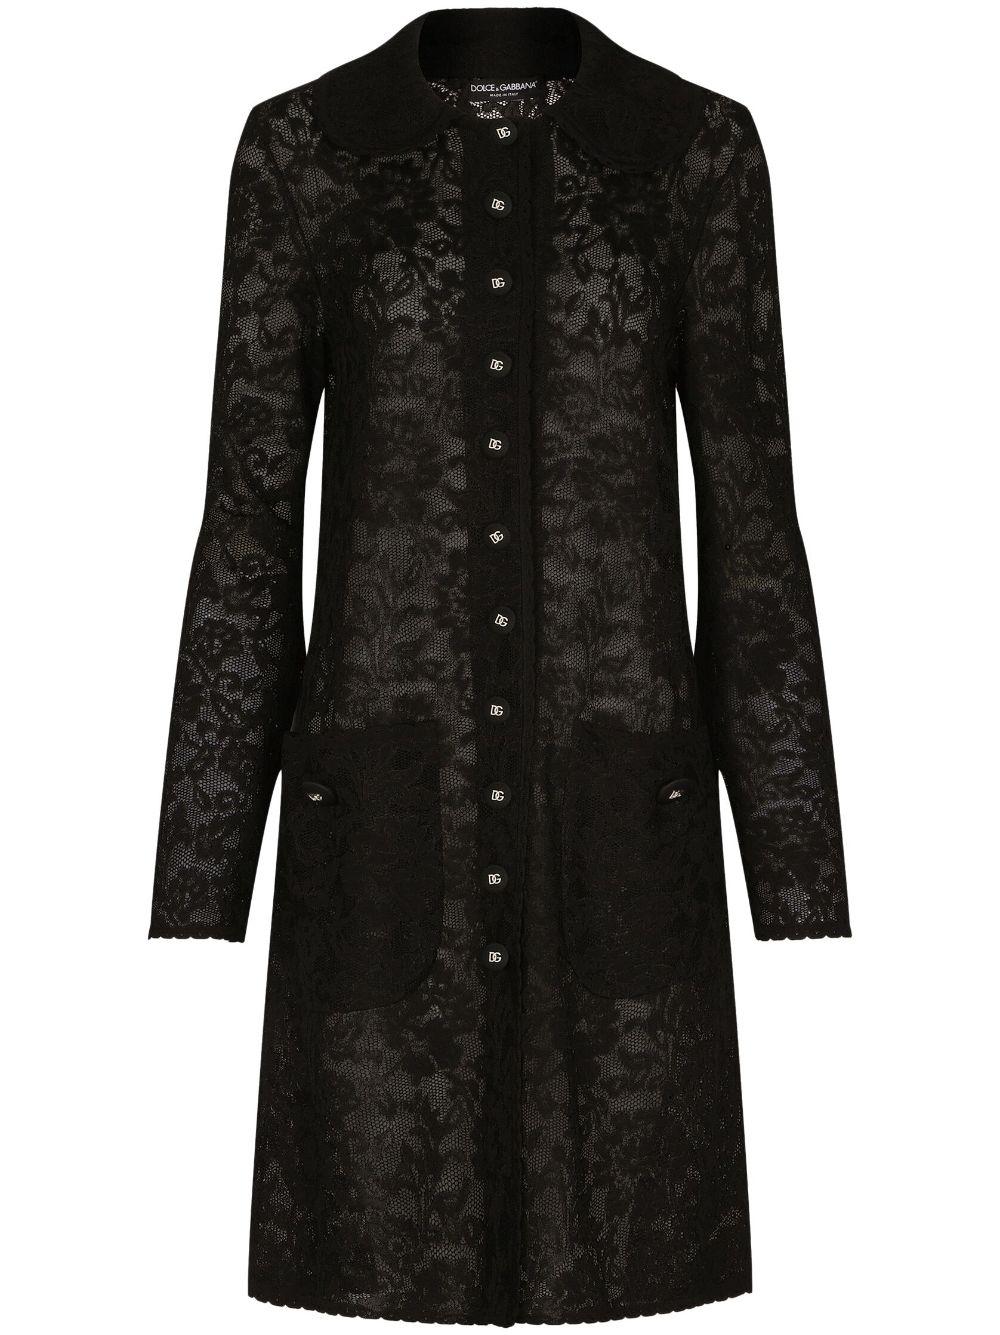 Dolce & Gabbana Lace-stitch Dg Jacket in Black | Lyst